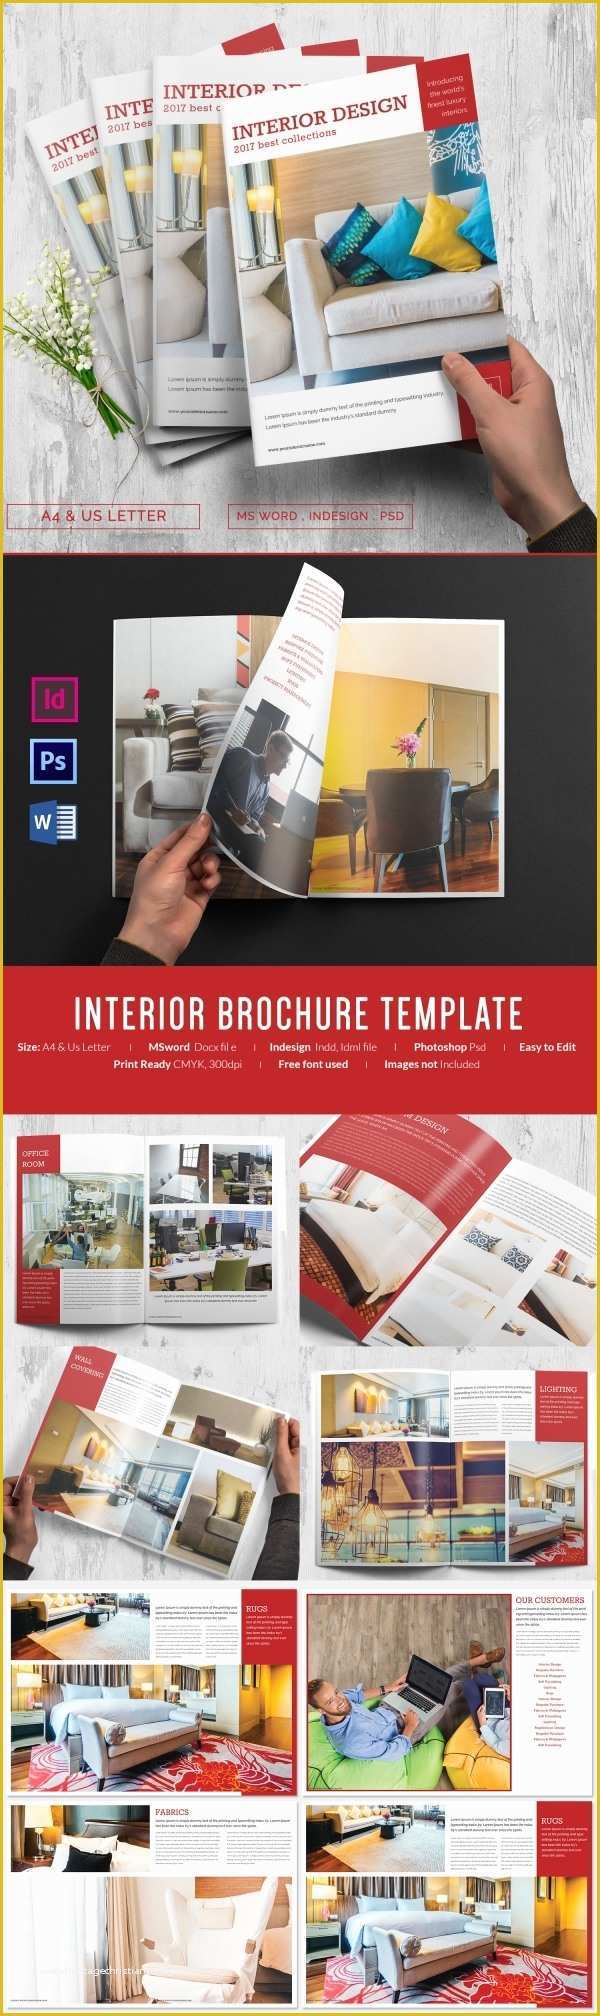 Interior Design Brochure Template Free Of Interior Design Brochure 25 Free Psd Eps Indesign